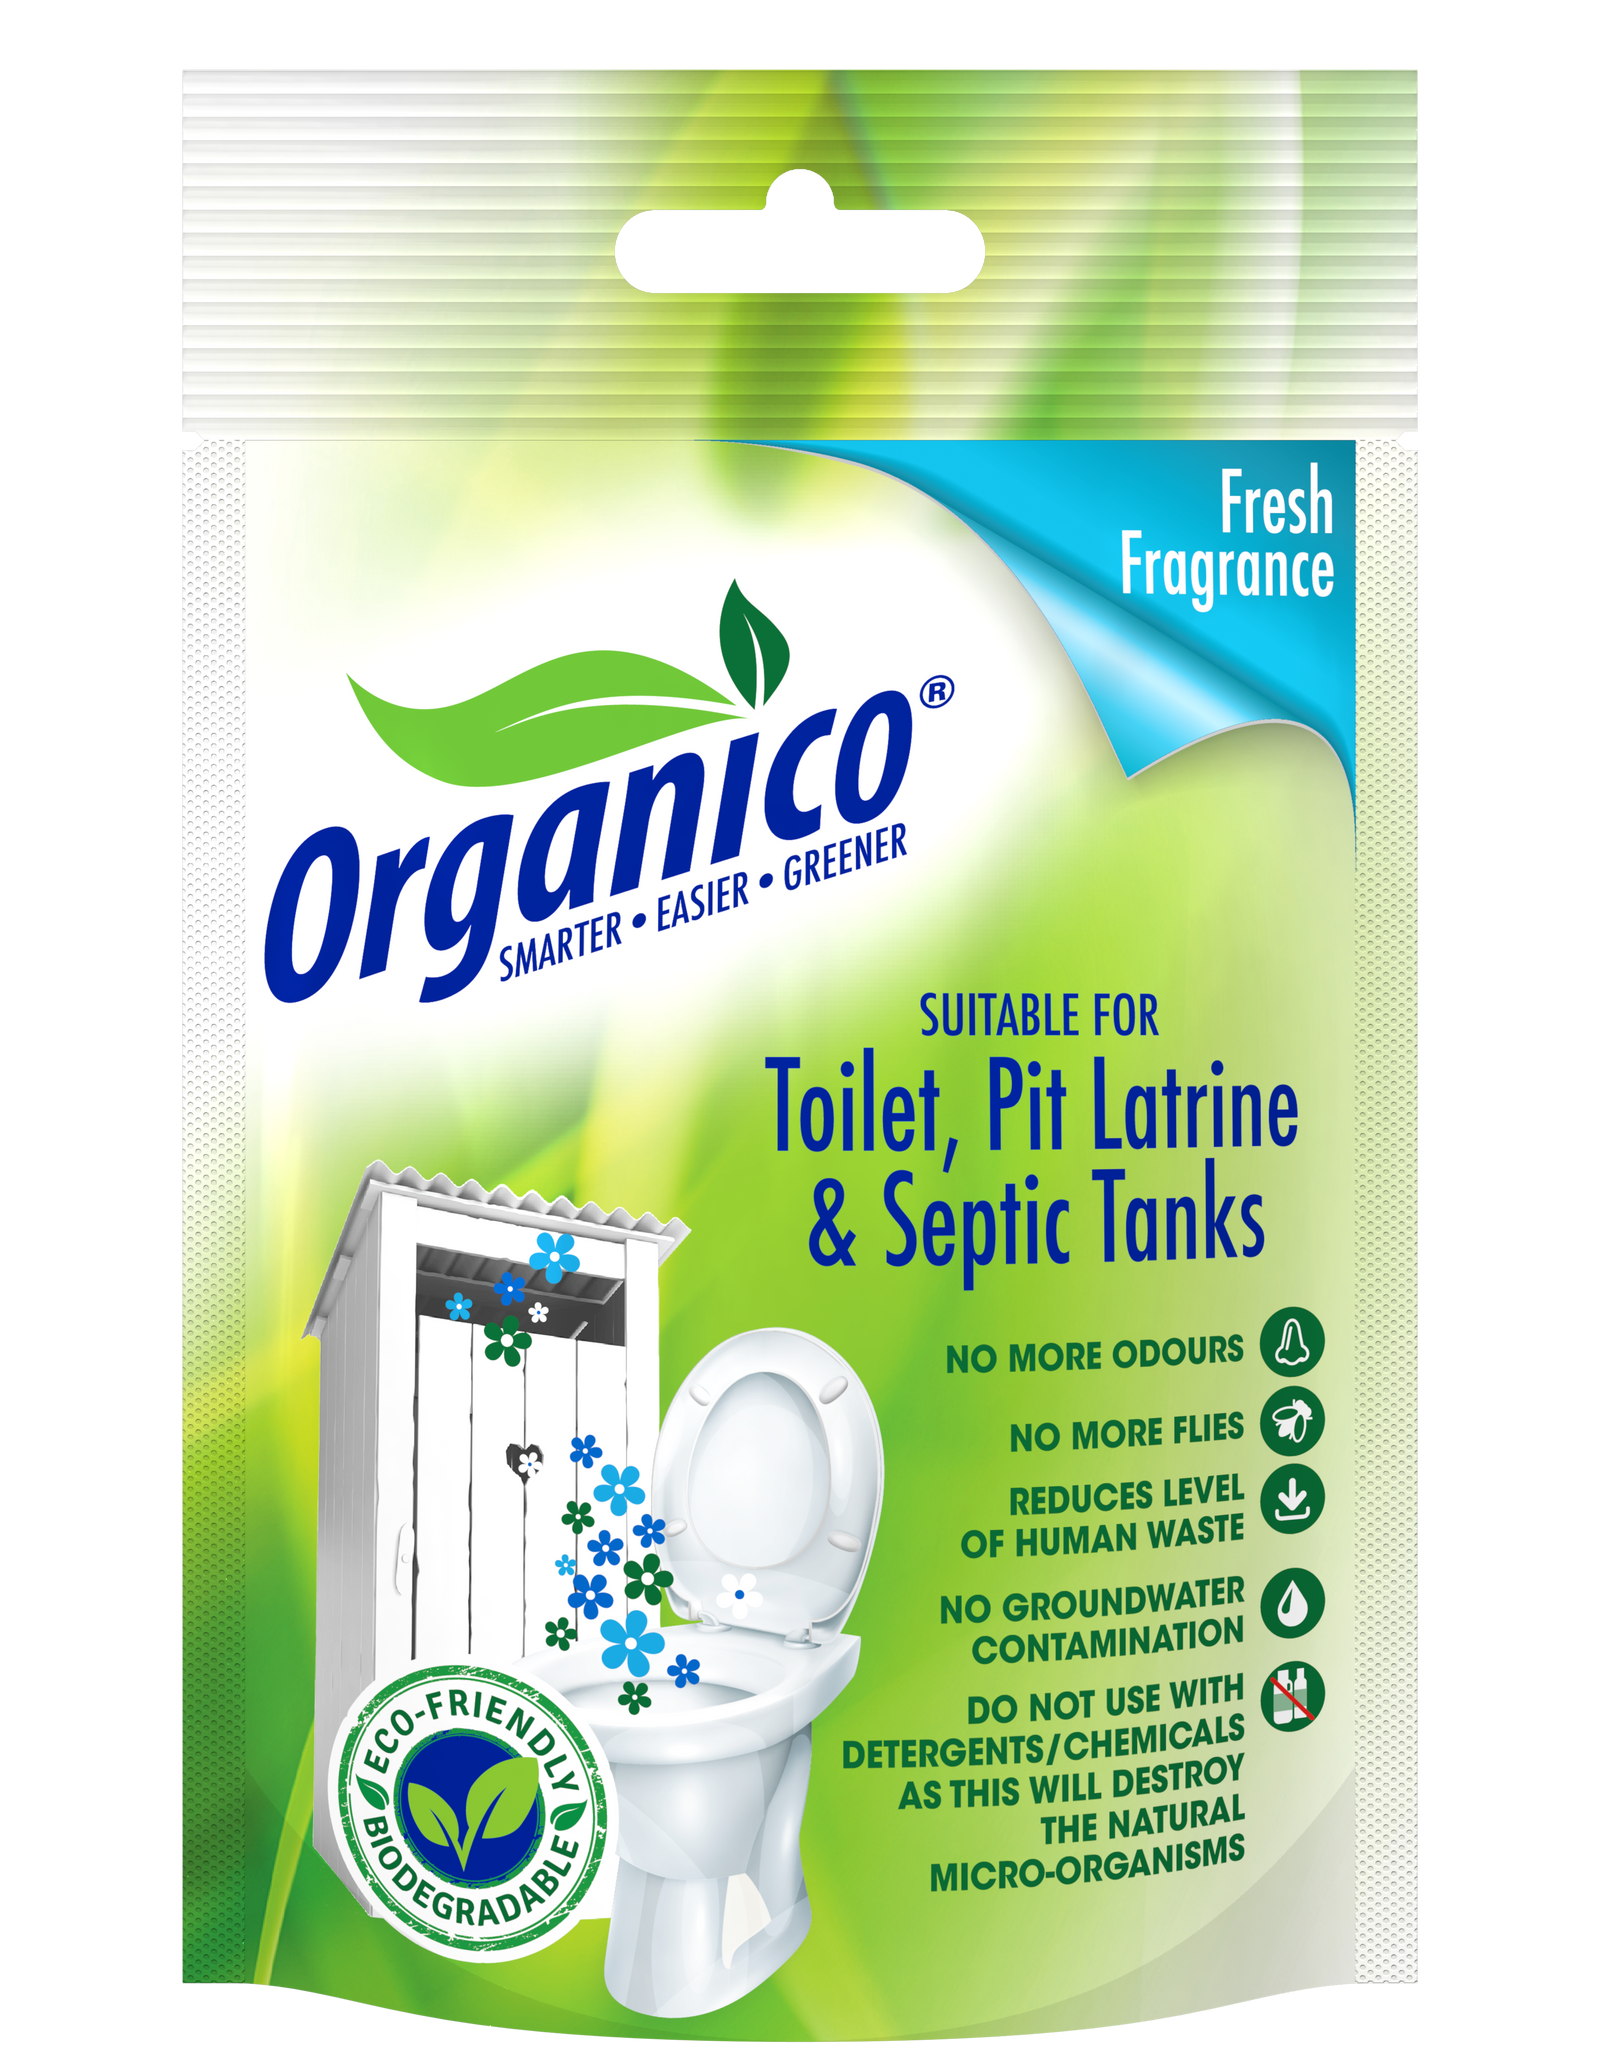 Organico Toilet, Pit & Septic Treatment - Fresh Fragrance [100g]